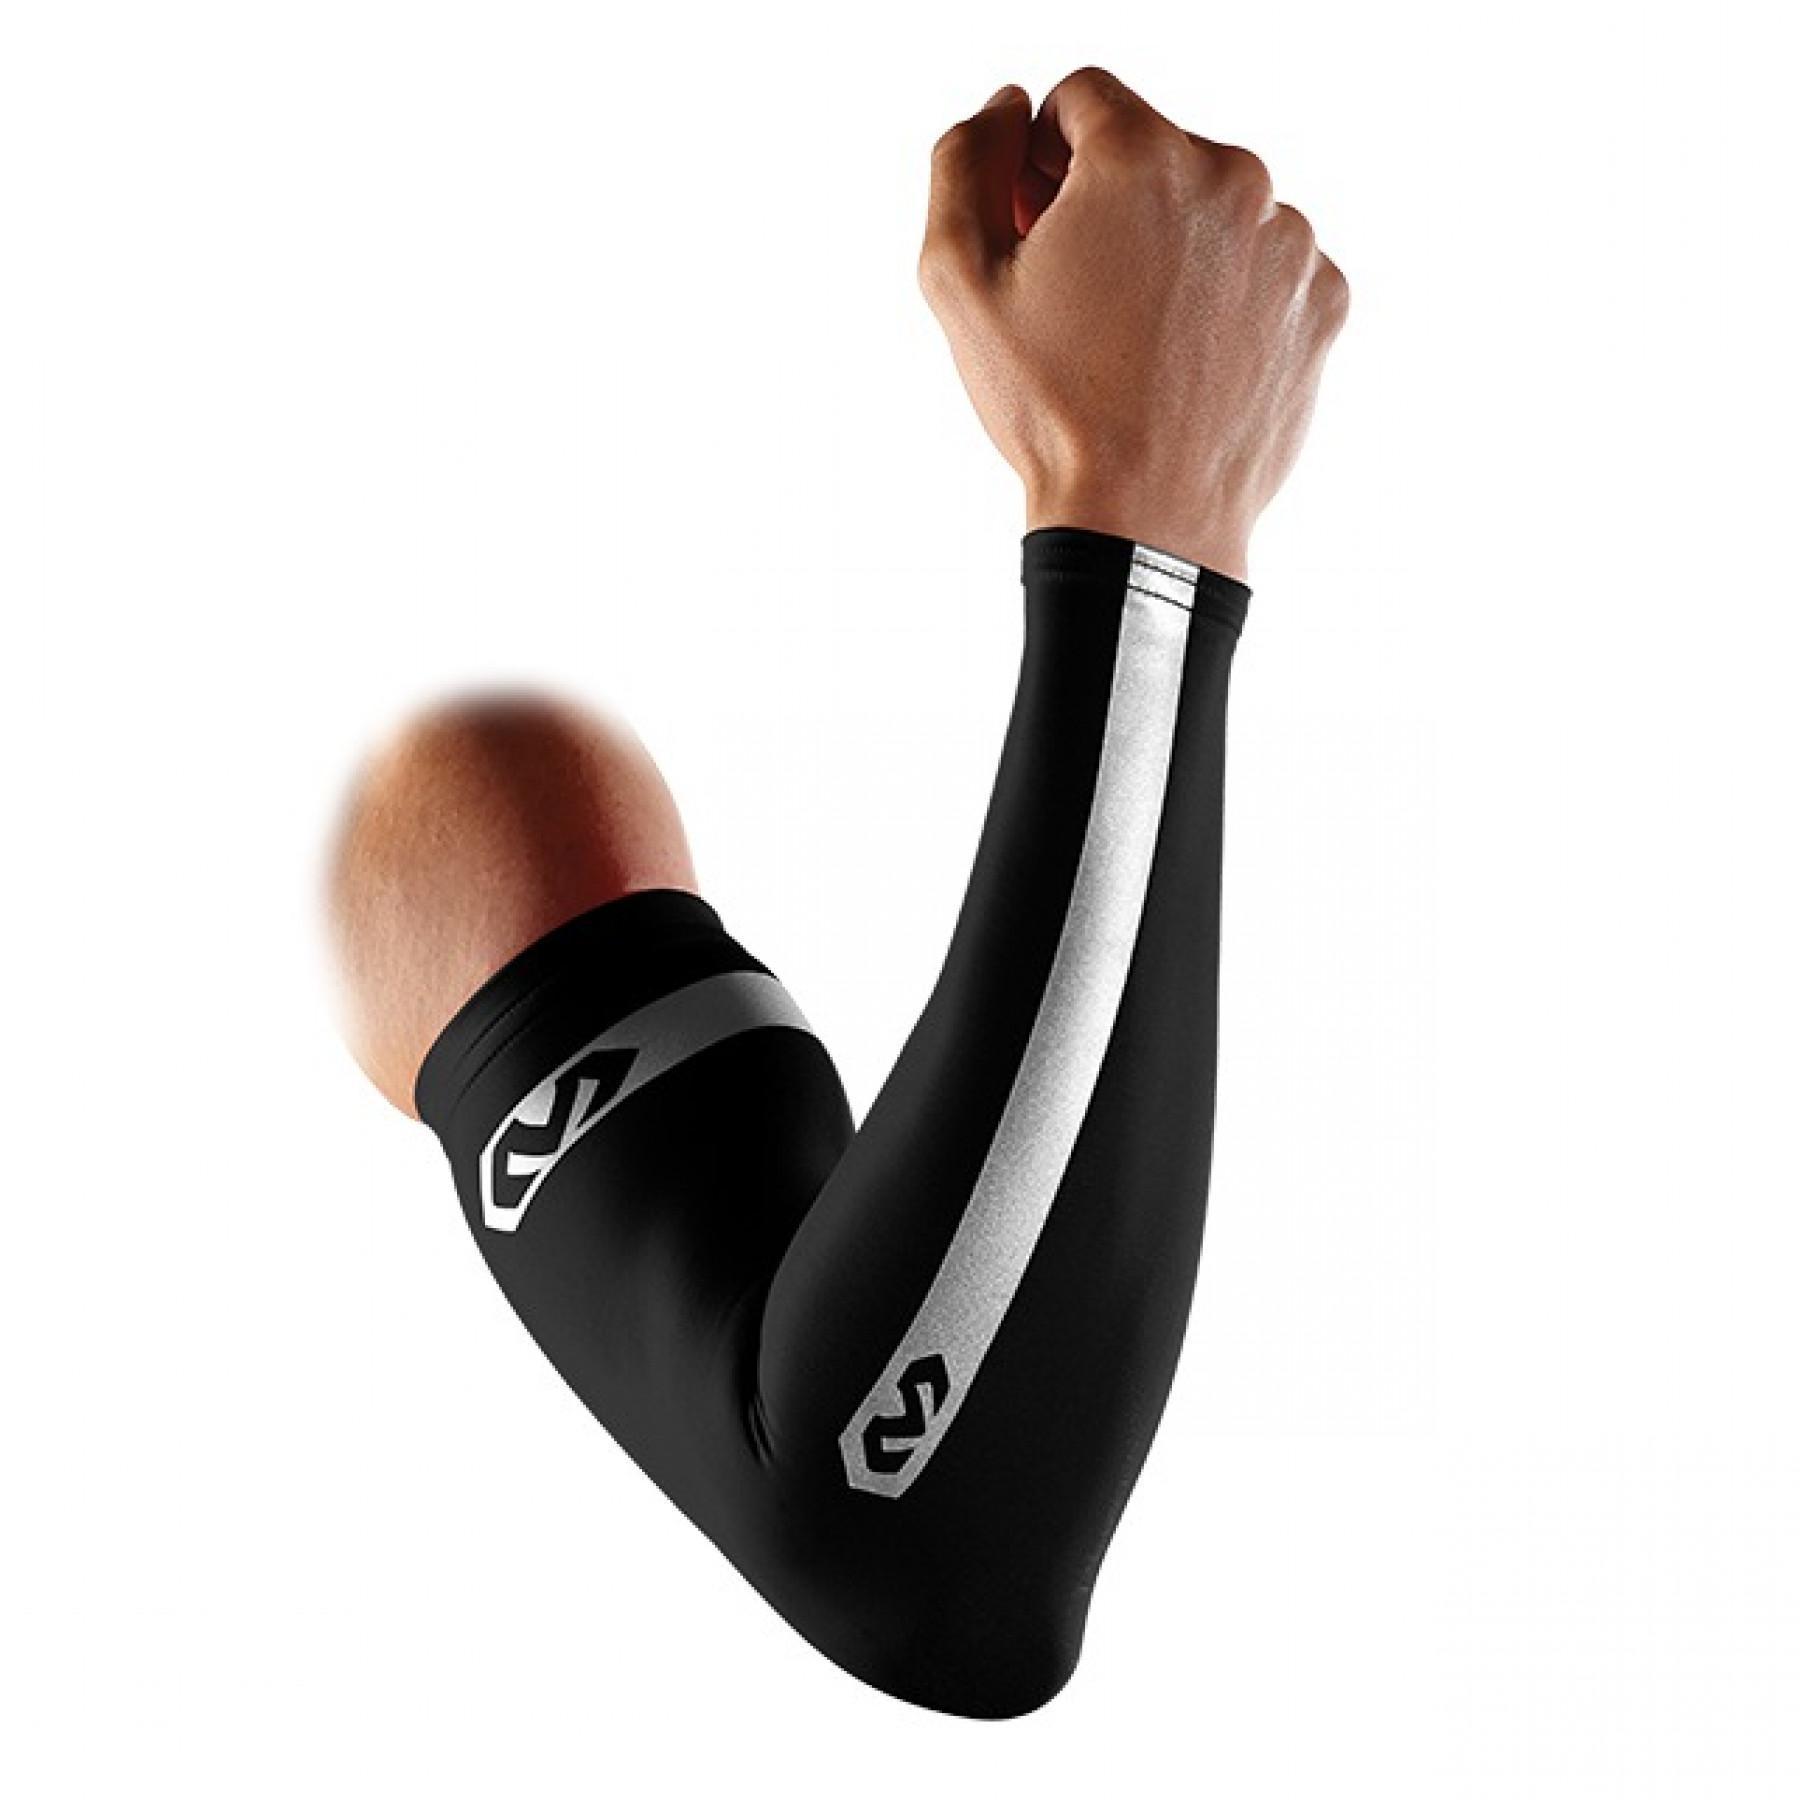 thuasne up activ leg compression sleeve - Arm sleeves